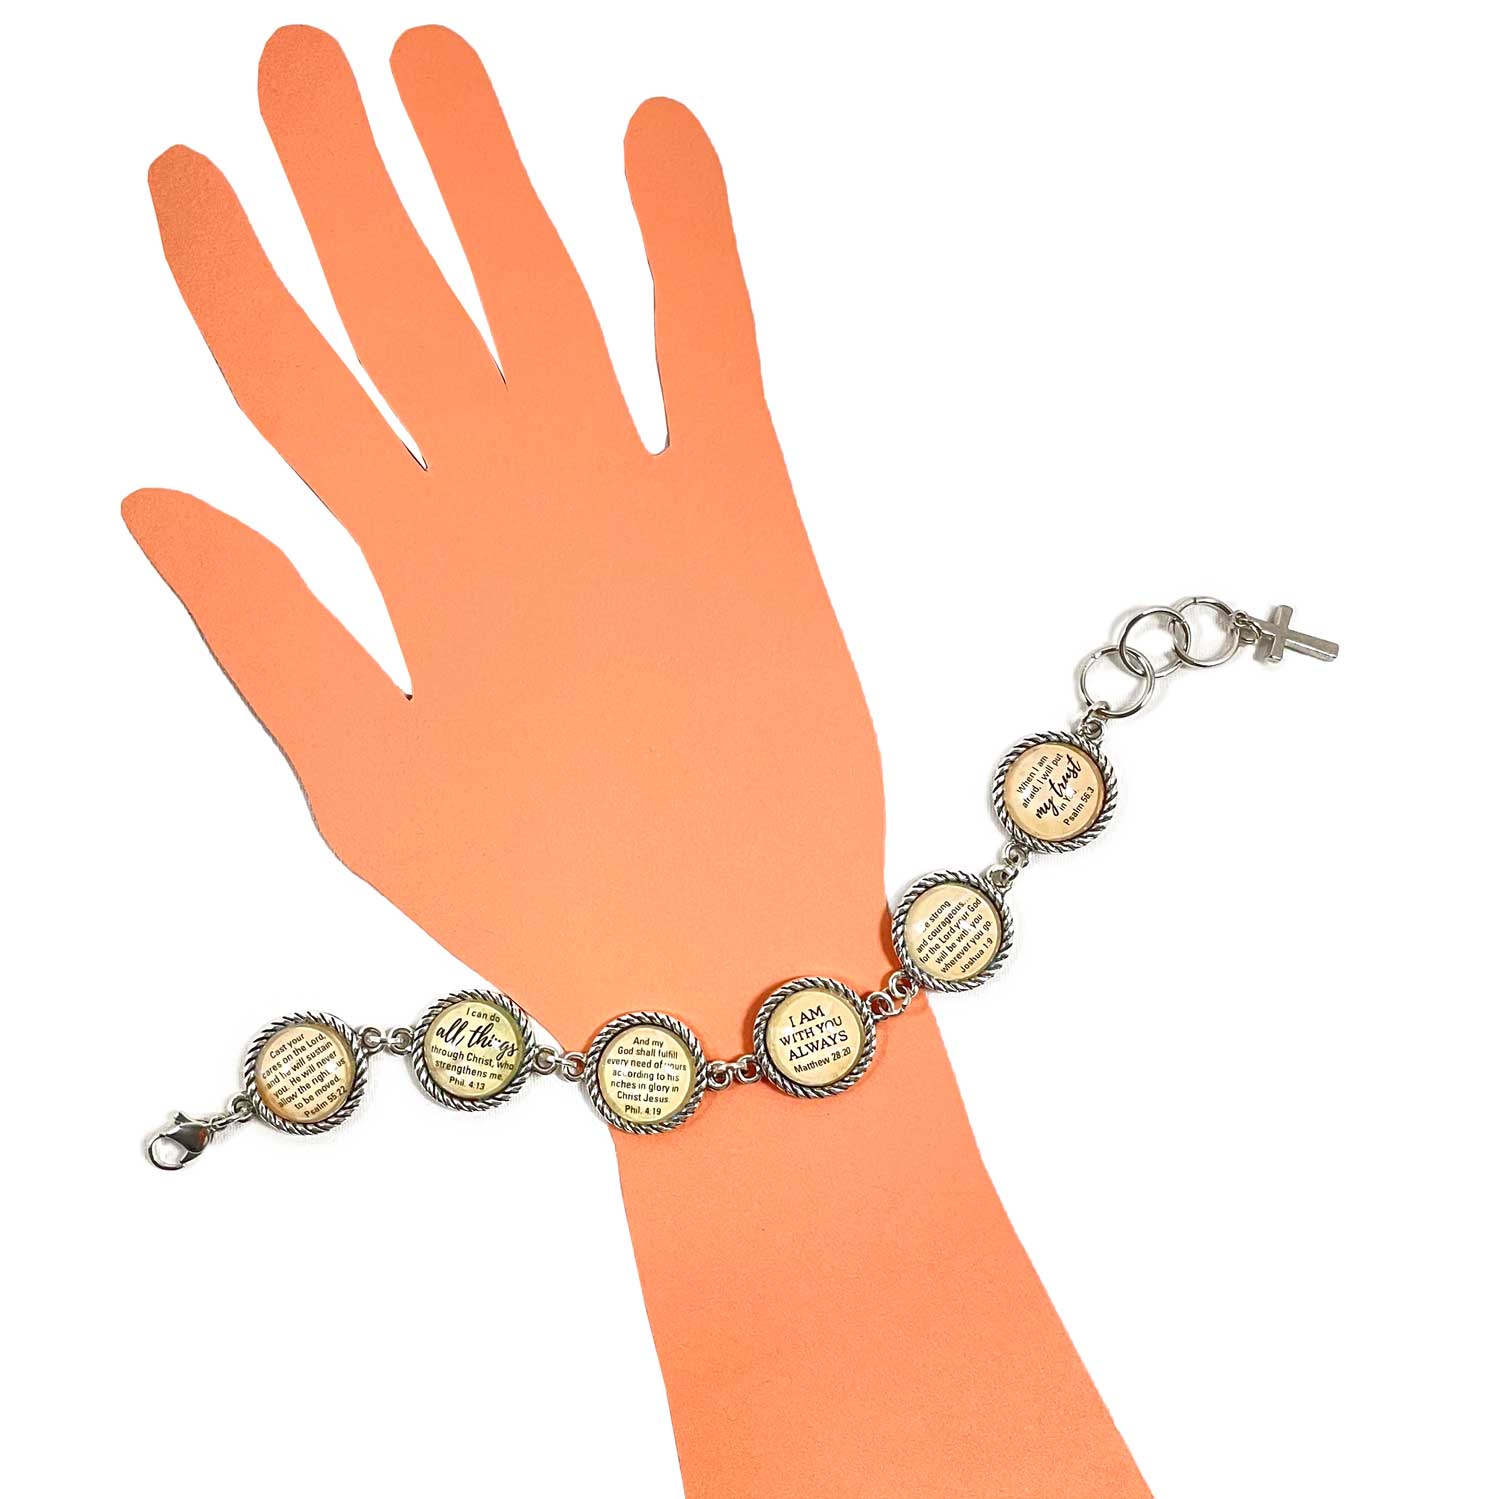 Serenity Prayer Charm Bracelet - Antique Silver Twist Edge Design - Bracelets - Bijou Her -  -  - 